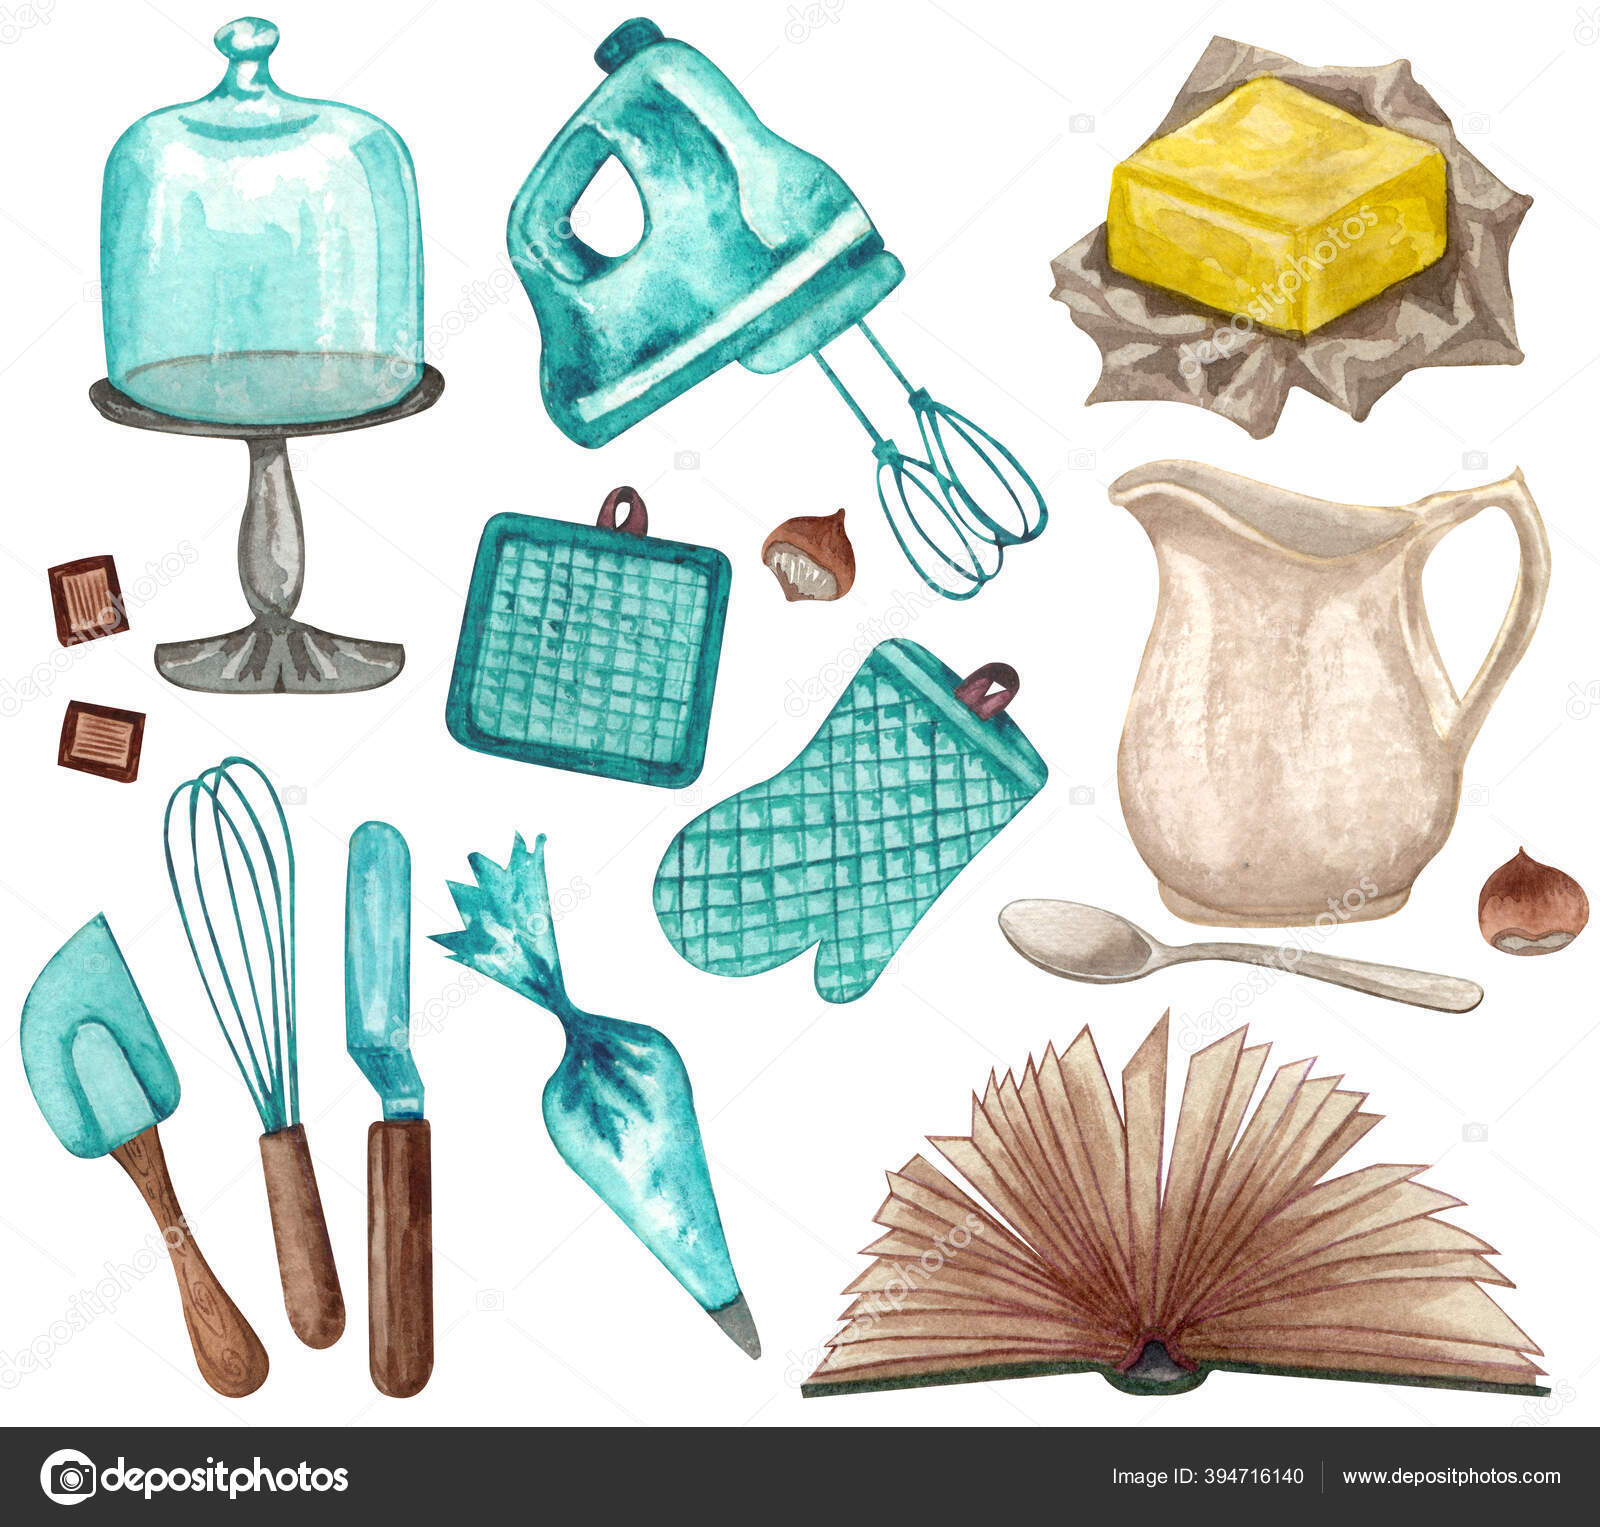 https://st4.depositphotos.com/9057096/39471/i/1600/depositphotos_394716140-stock-illustration-baking-watercolor-set-kitchen-utensils.jpg